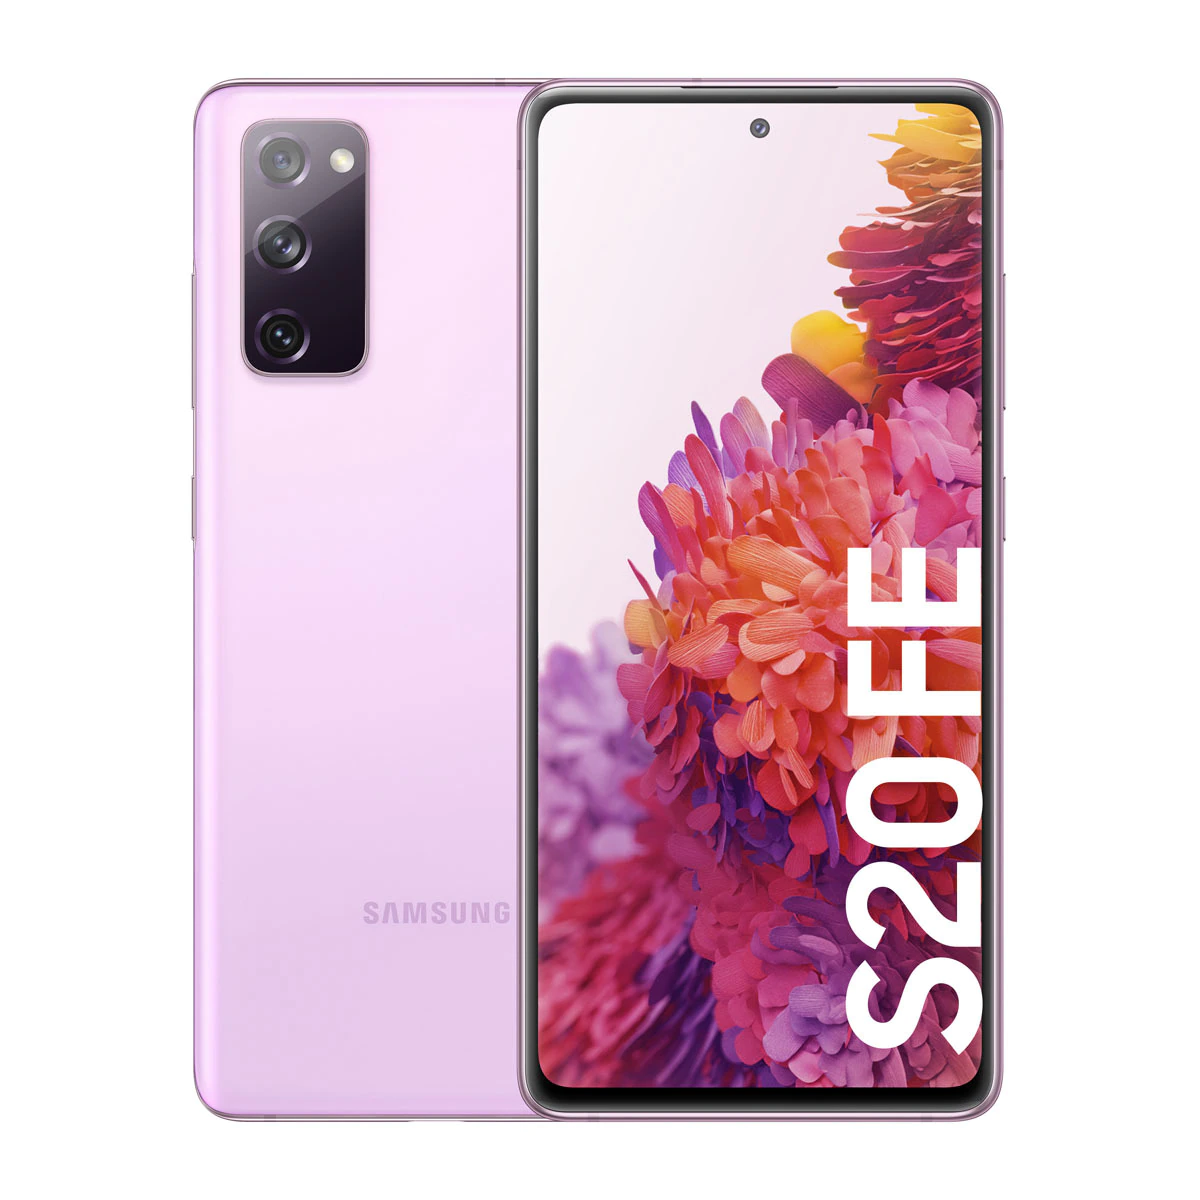 Samsung Galaxy S20 FE 6 GB + 128 GB Cloud Lavender móvil libre